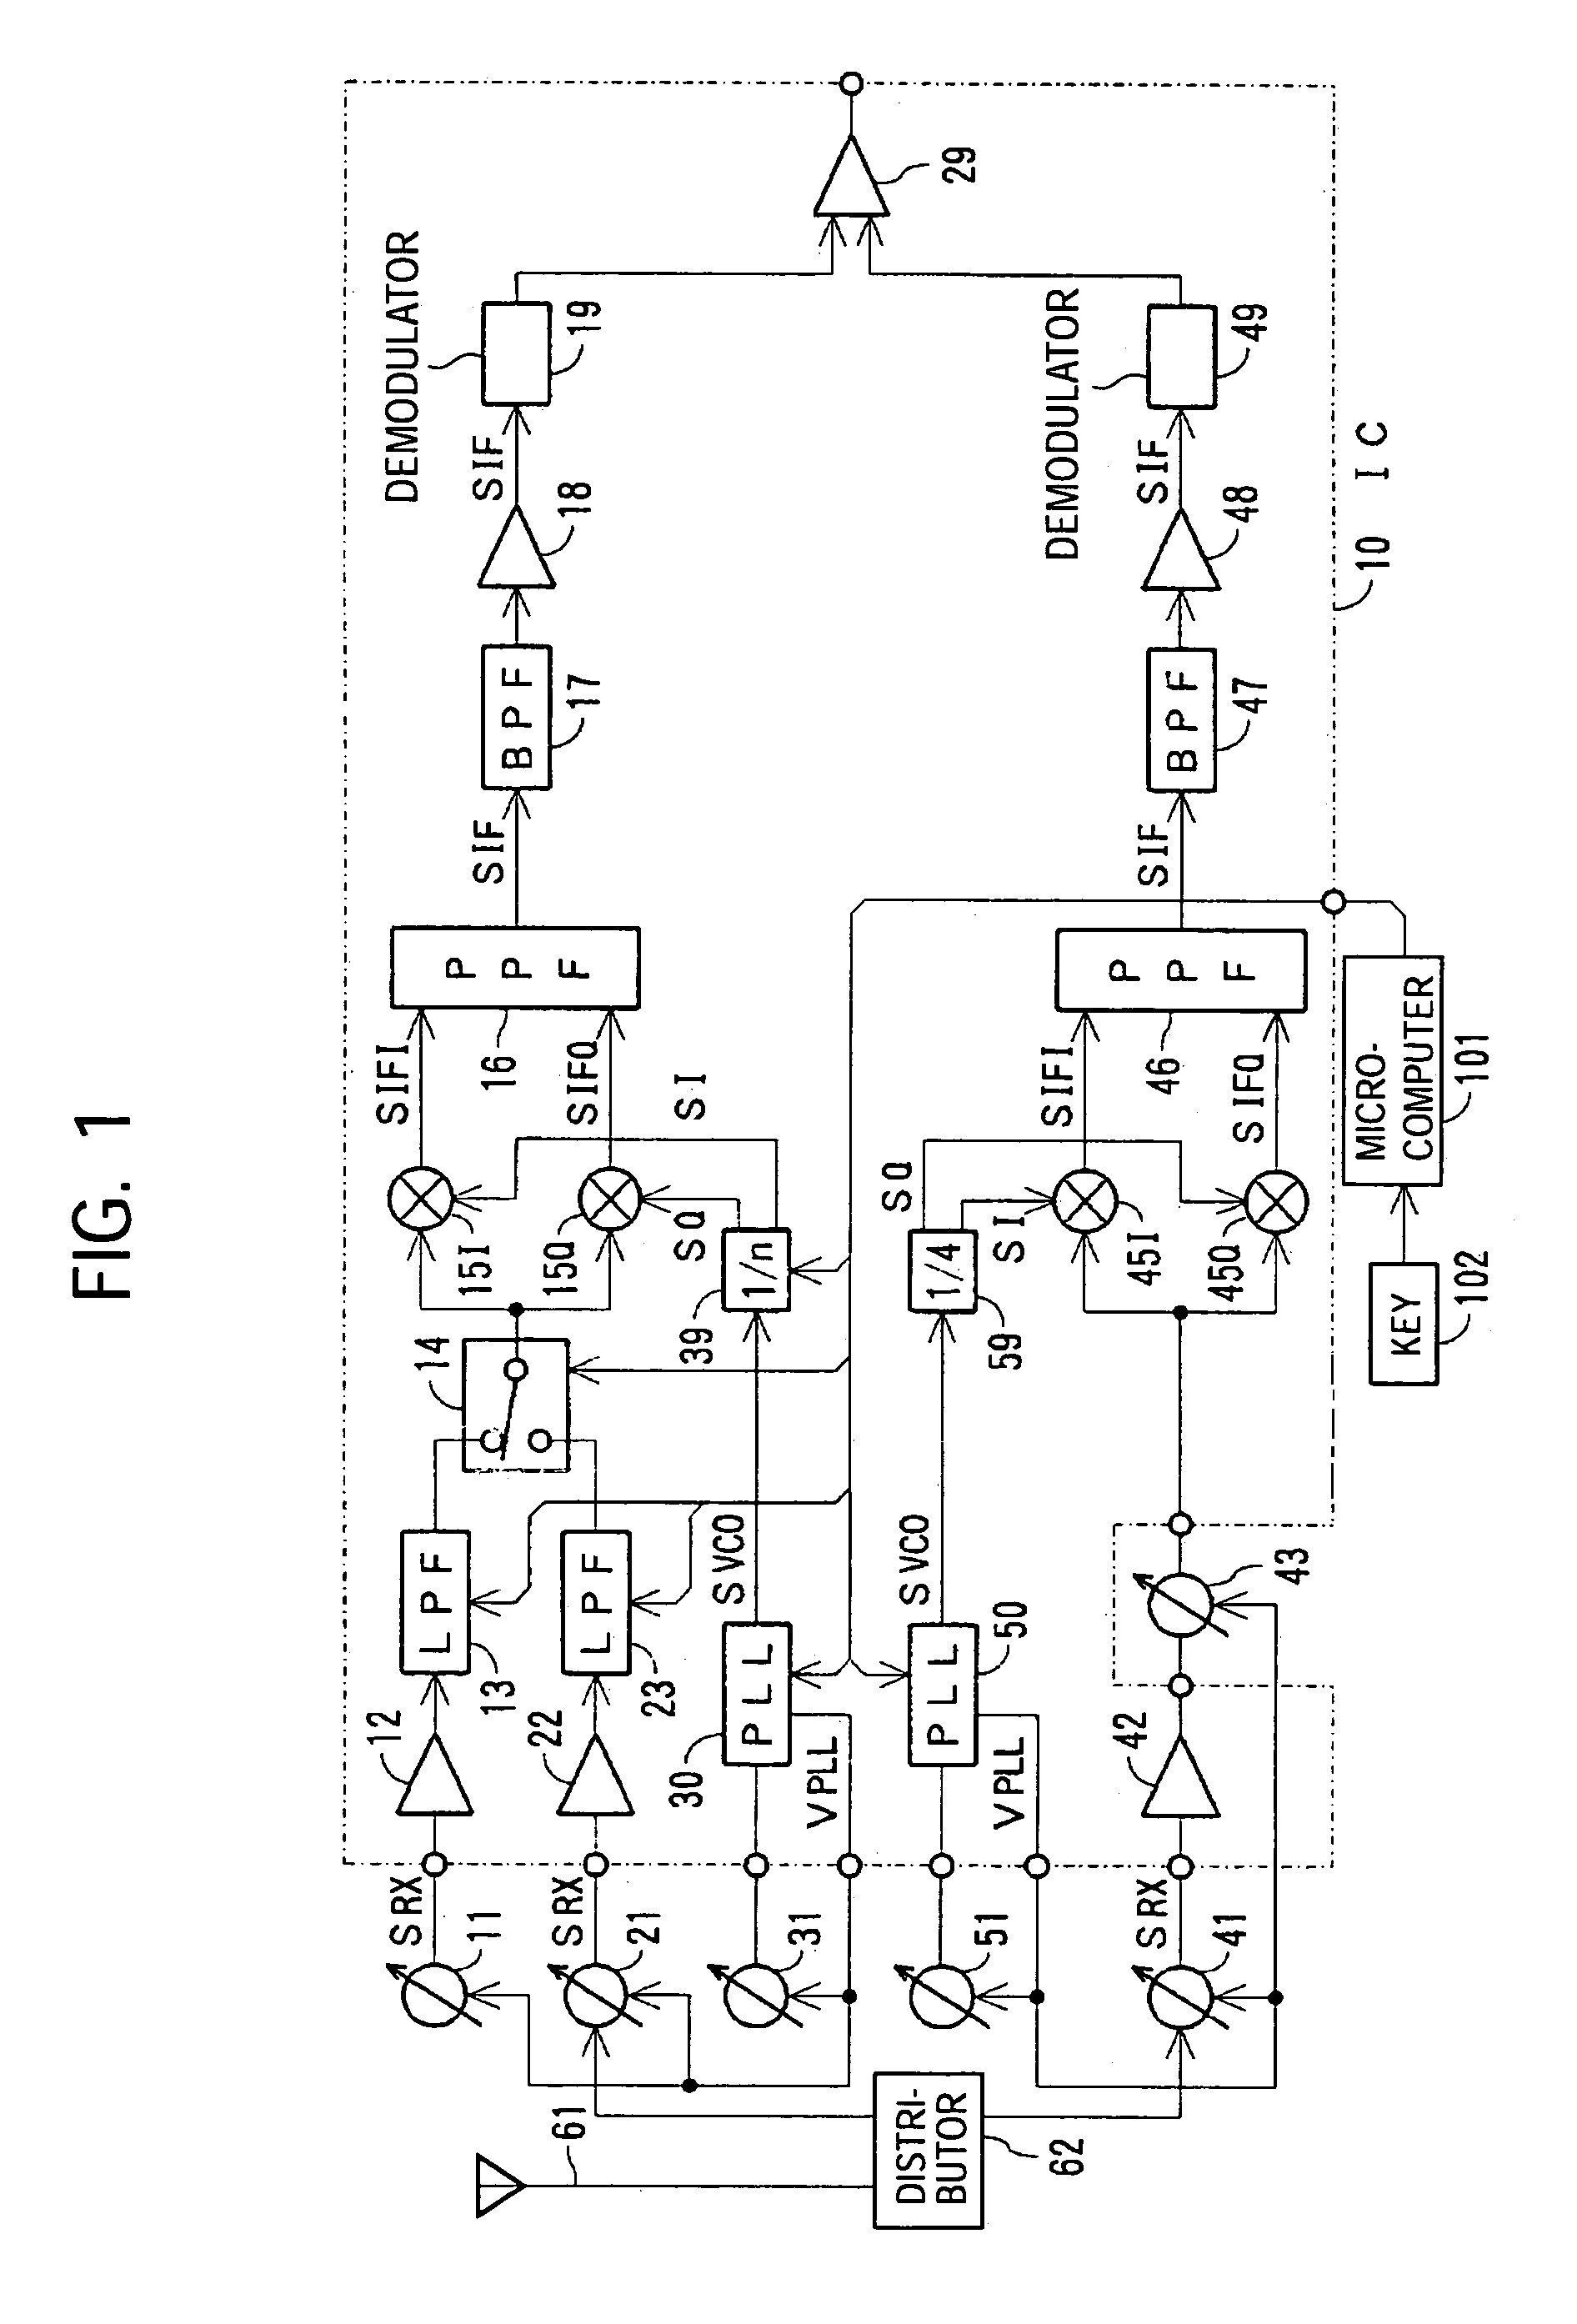 Antenna tuned circuit for a superheterodyne receiver